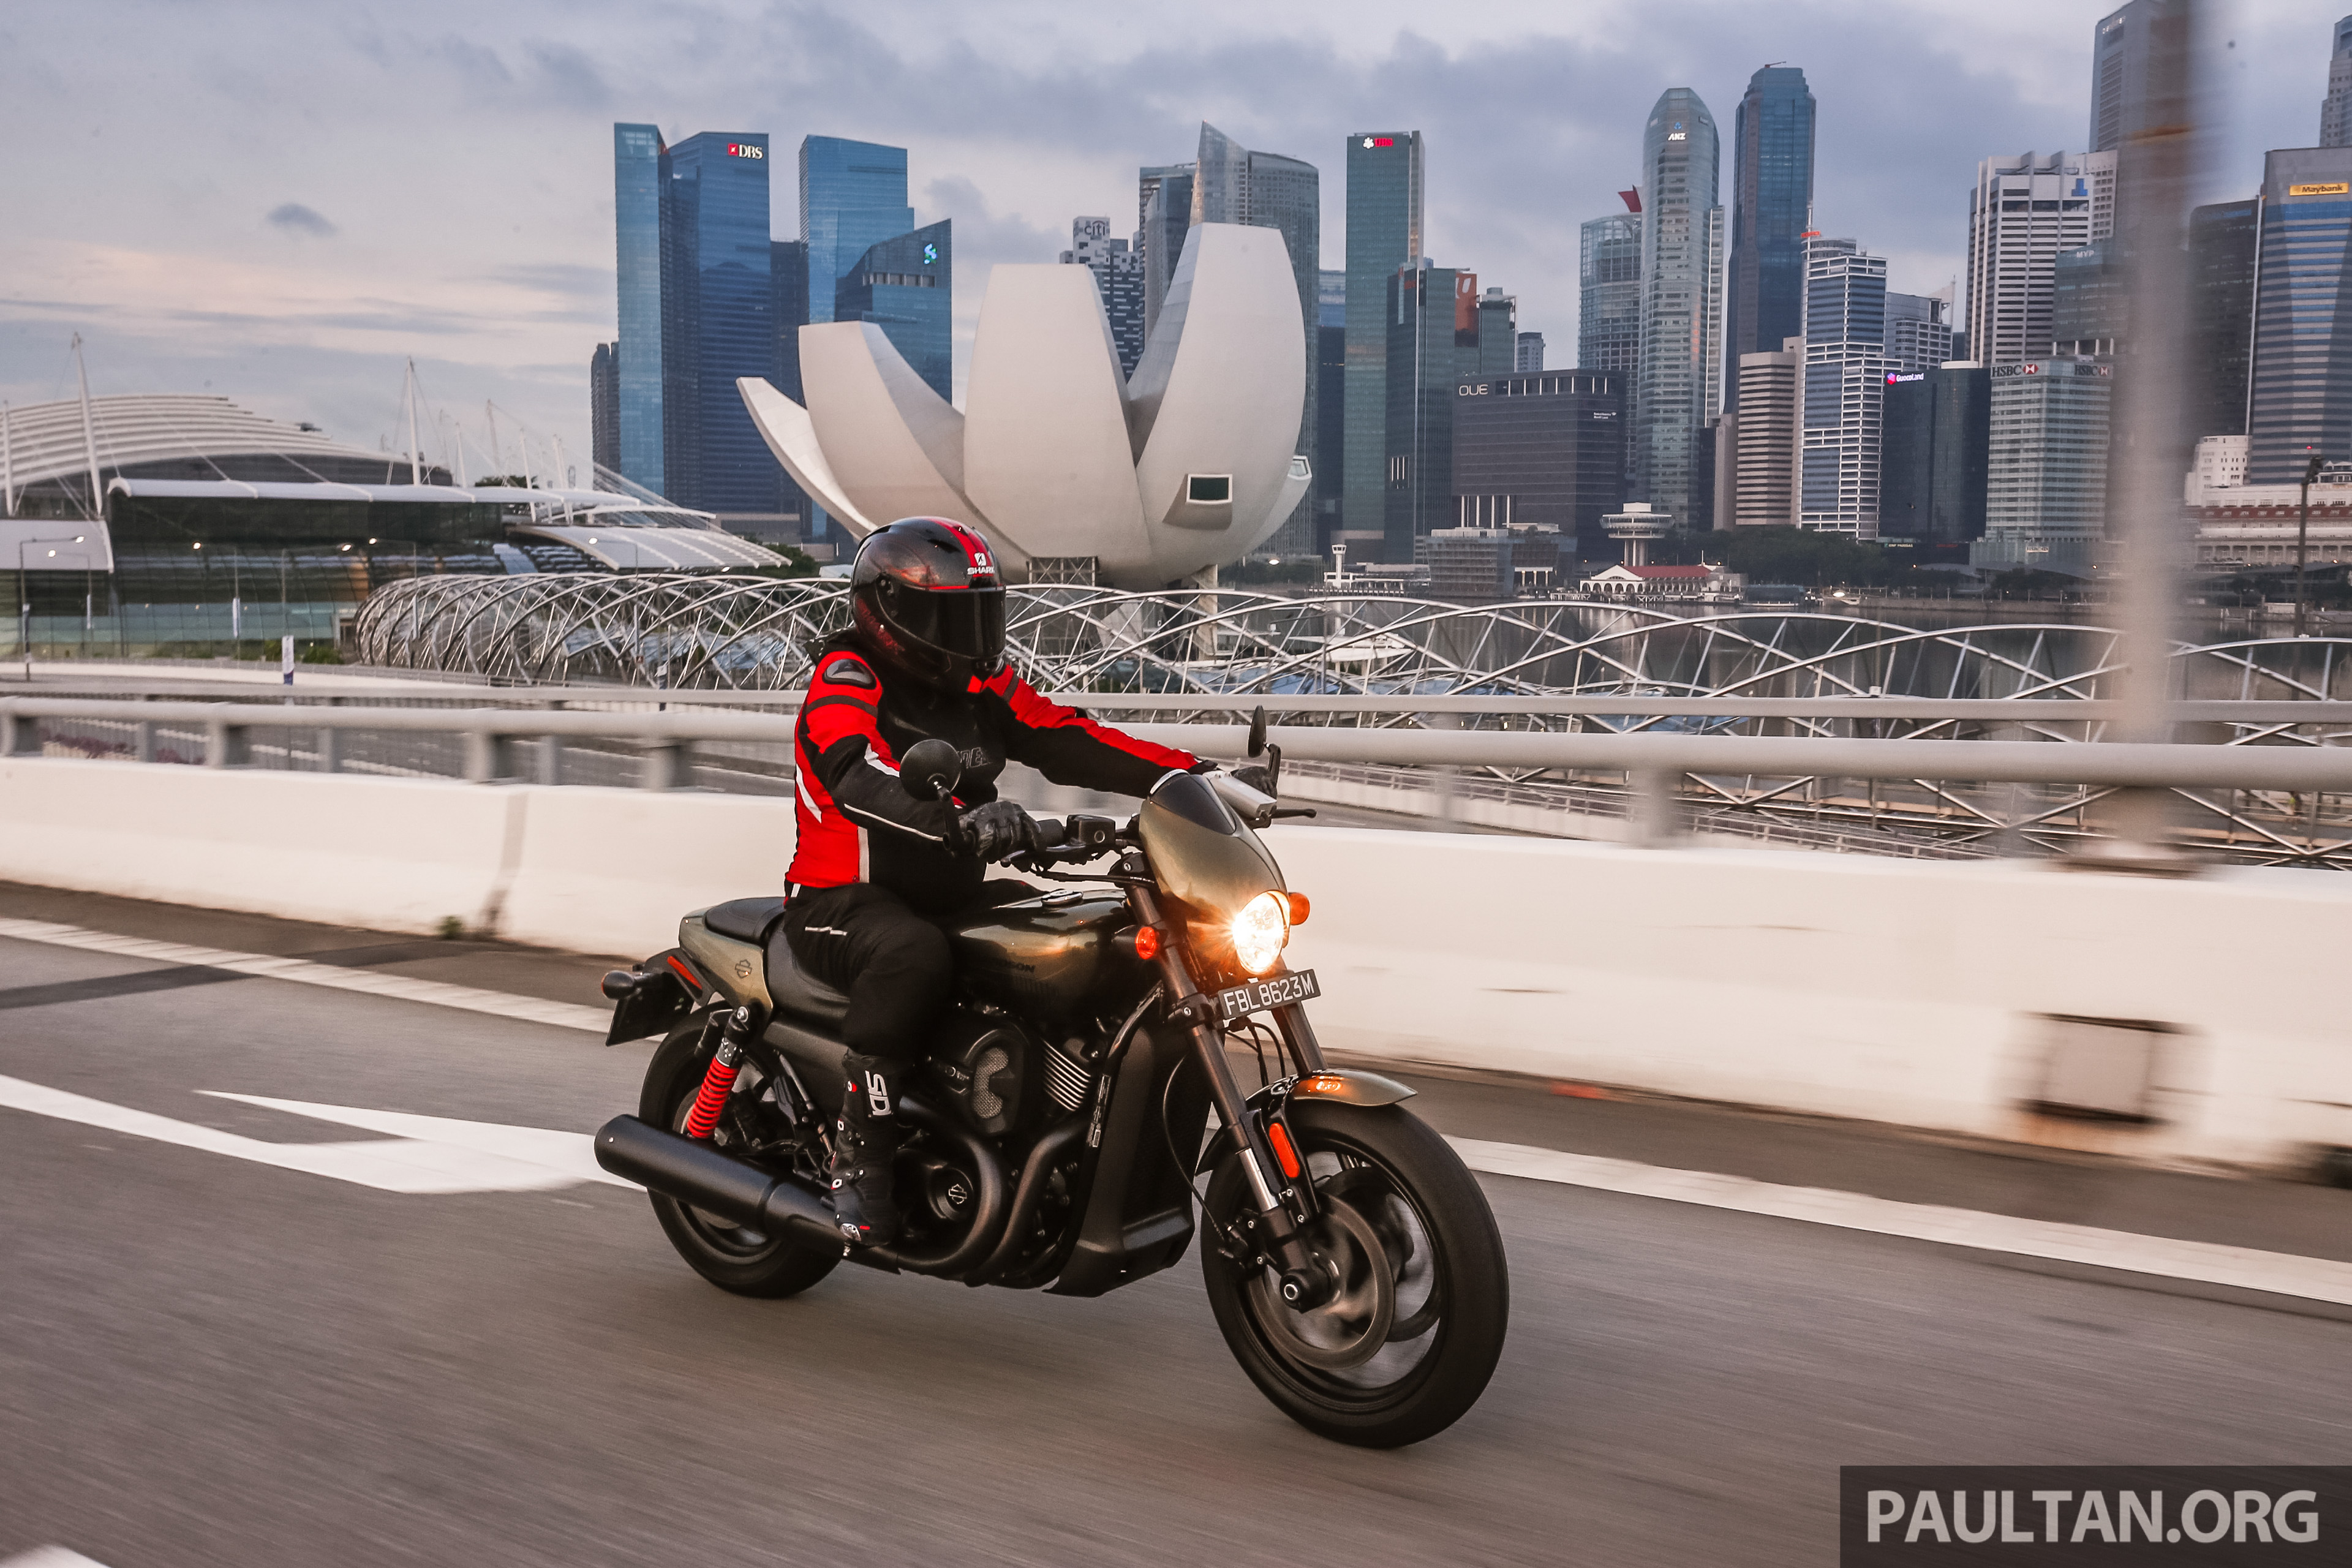 2017 Harley Davidson Street Rod 750 in Singapore-2 - Paul Tan's ...